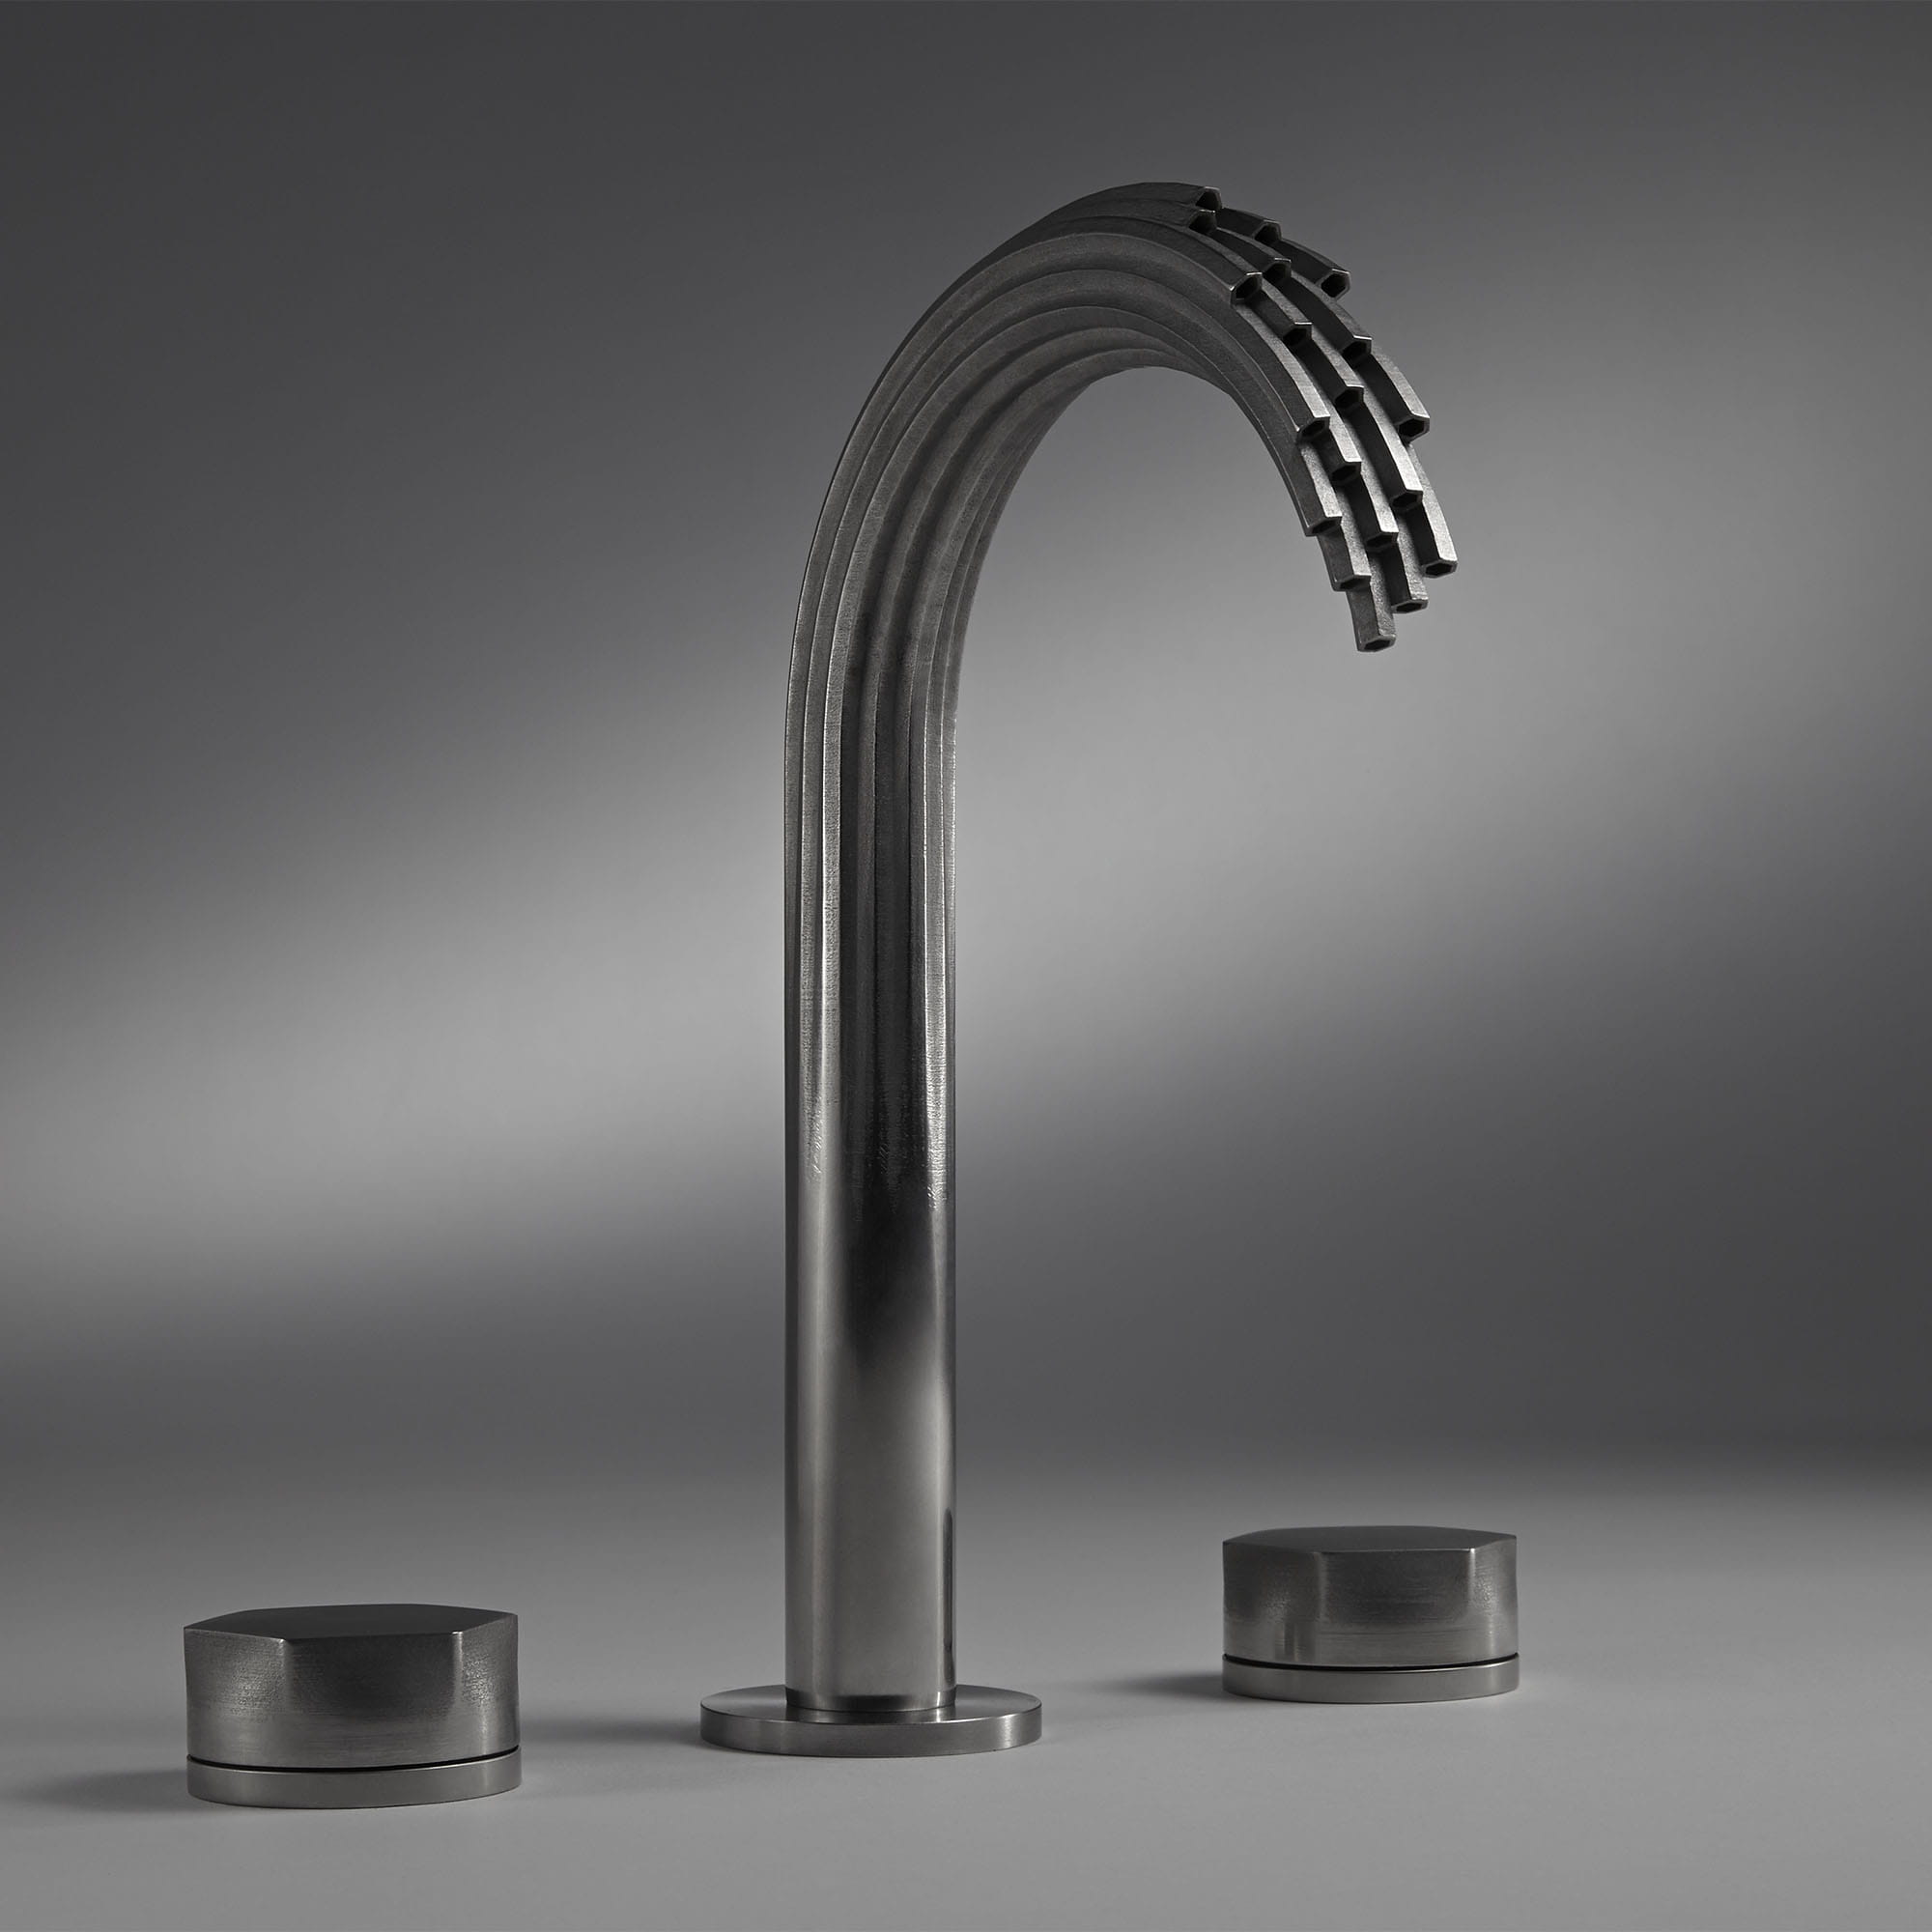 Shadowbrook 2-Handle Widespread 3D Printed Bathroom Faucet with Knob Handles